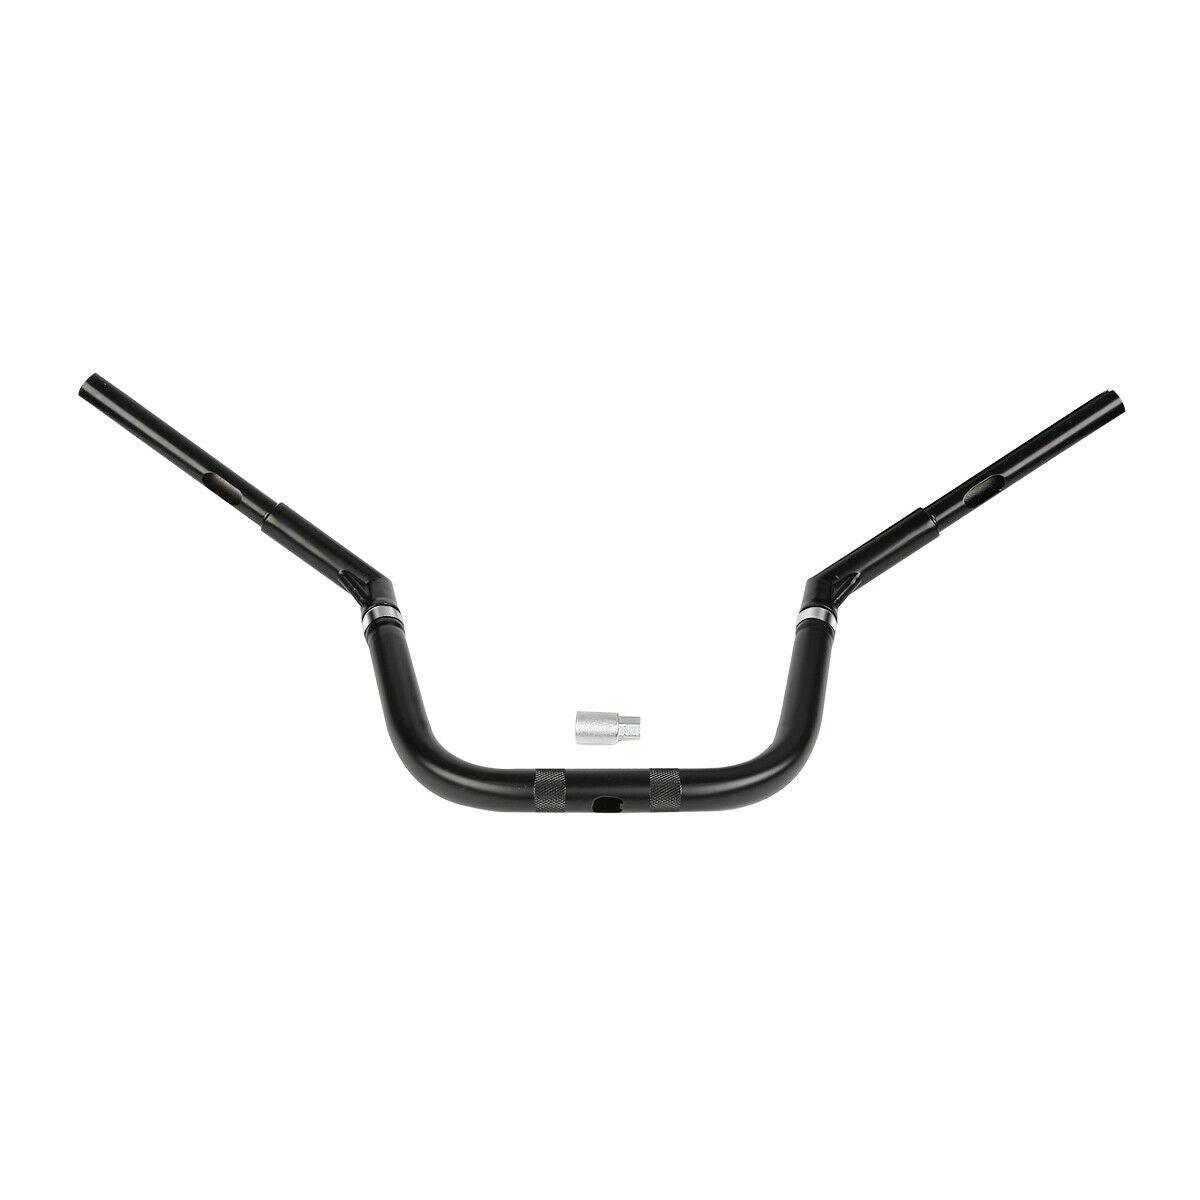 Adjustable 10"Rise 1.25" Handlebar Bar Fit For Harley Softail Deuce Slim Fat Boy - Moto Life Products